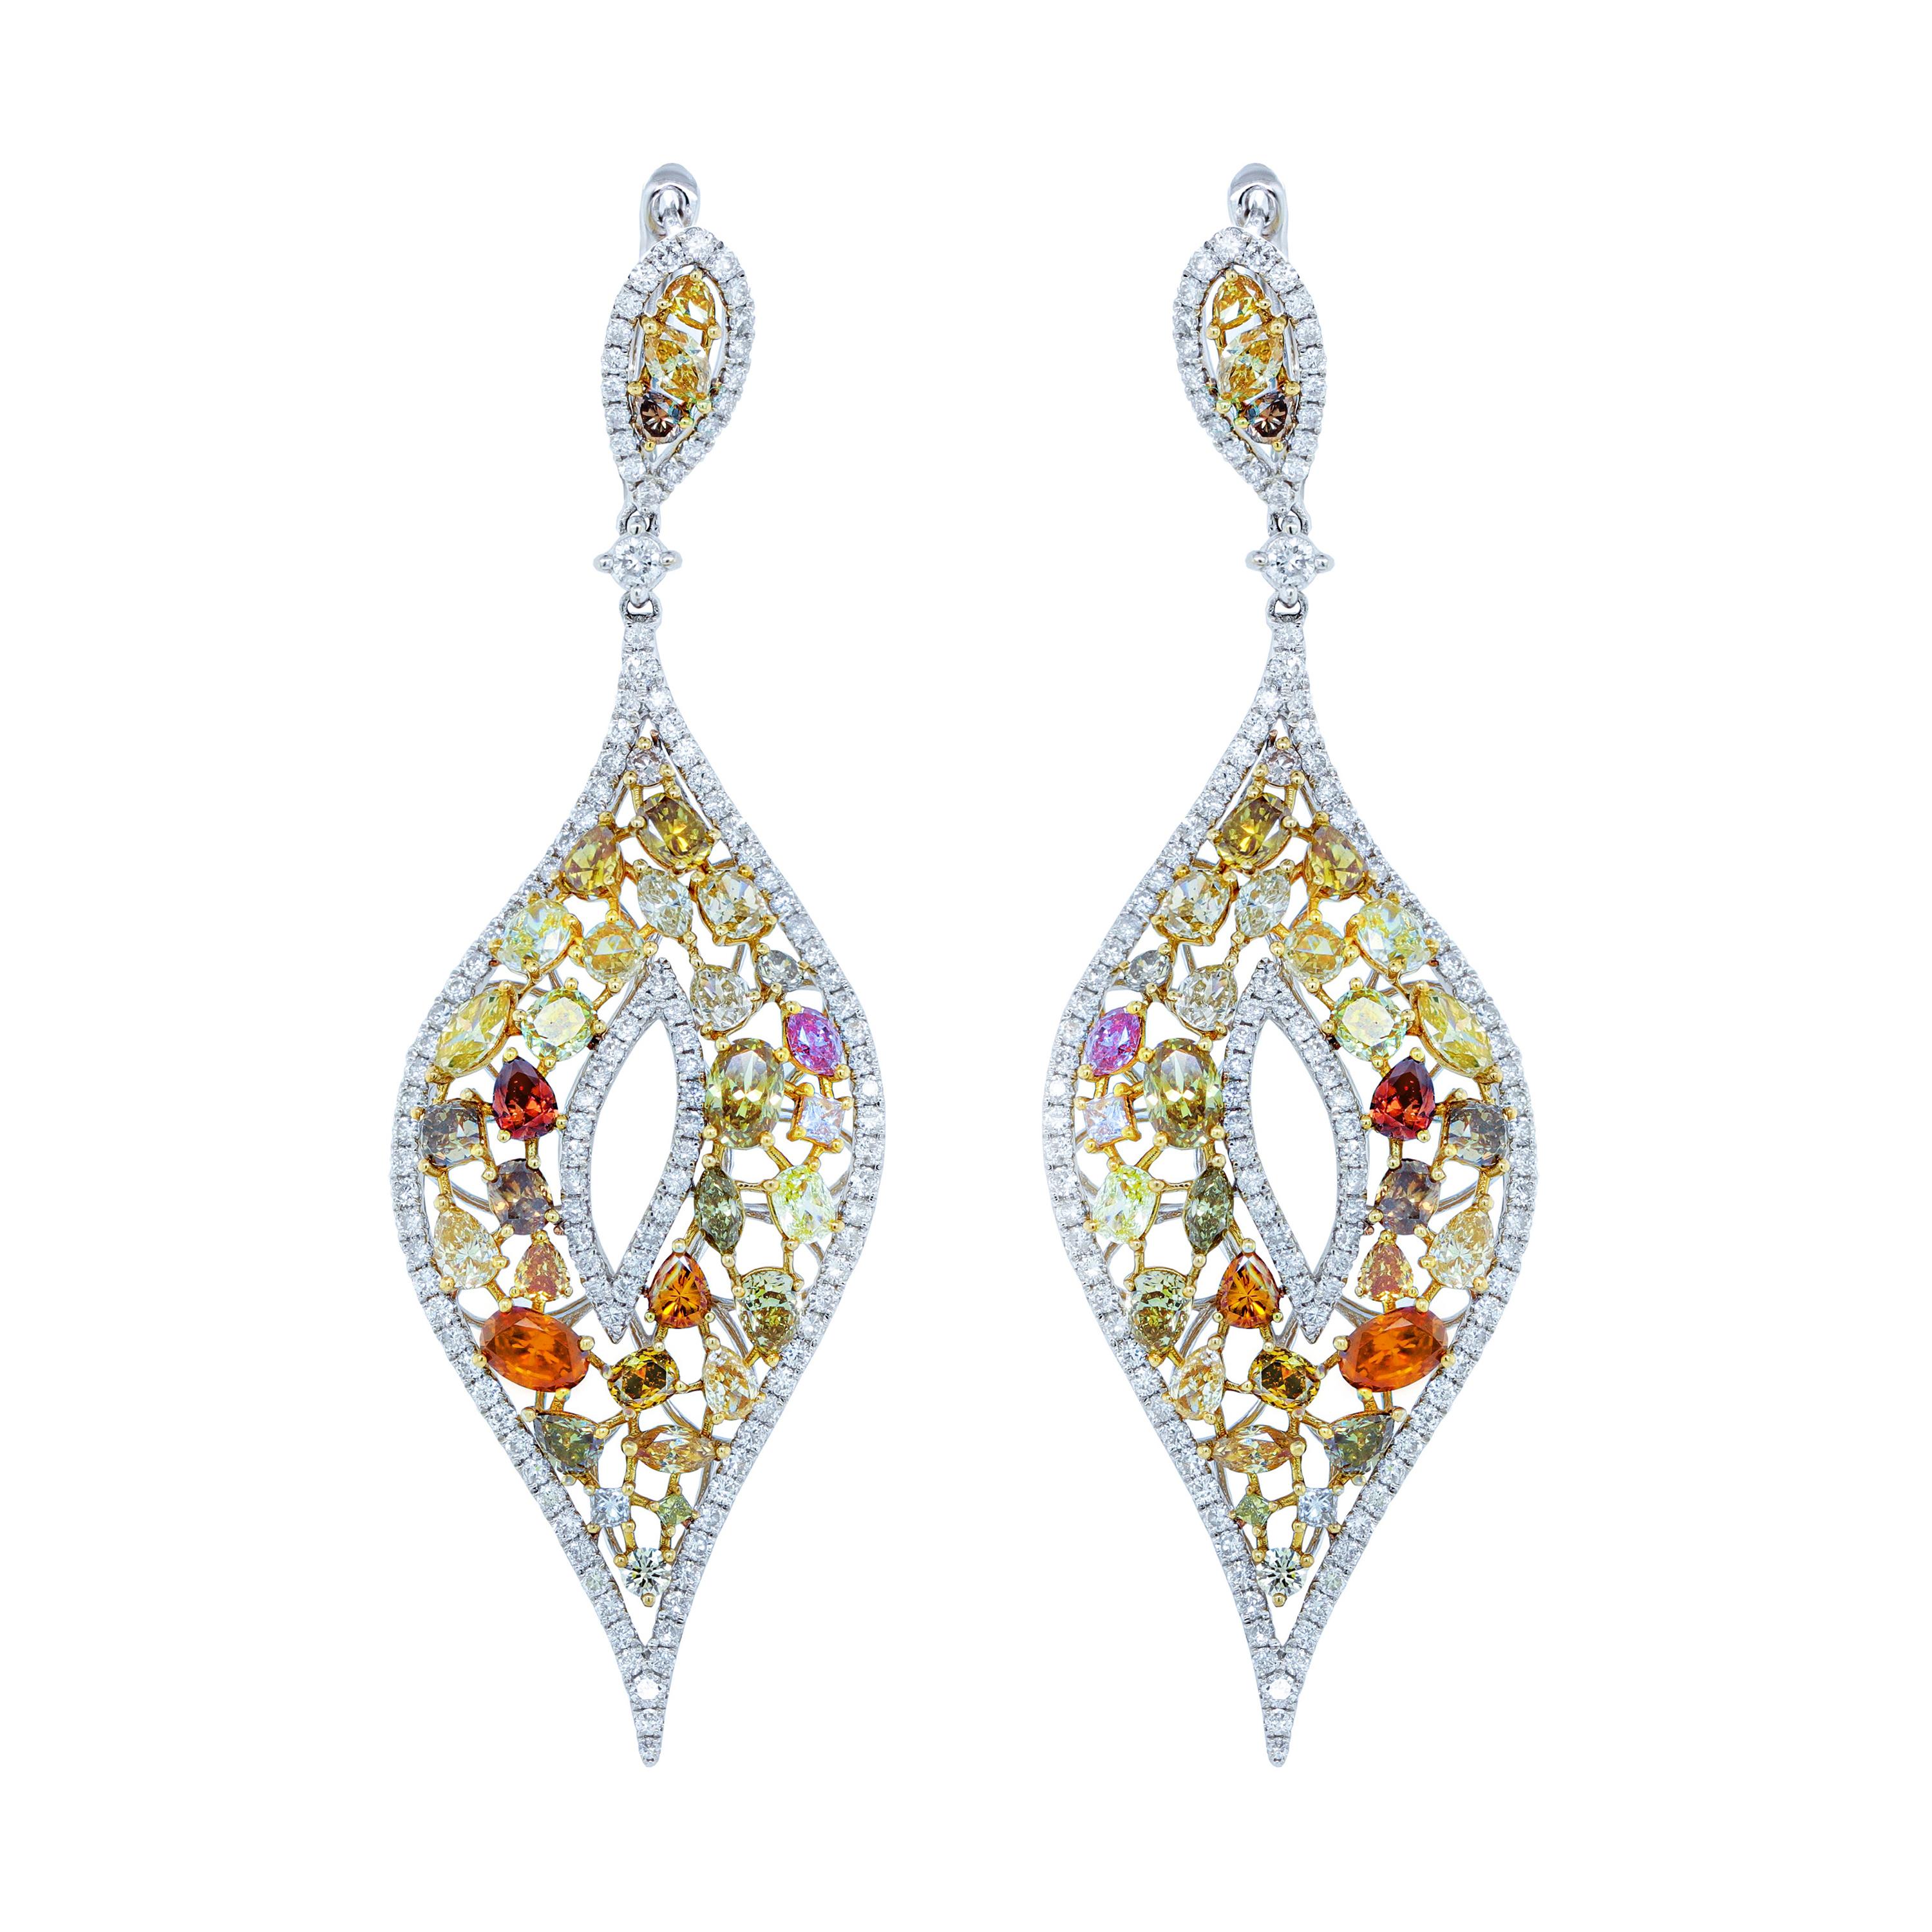 18k White Gold Diamond Earrings with 11.50 Carat of Diamonds